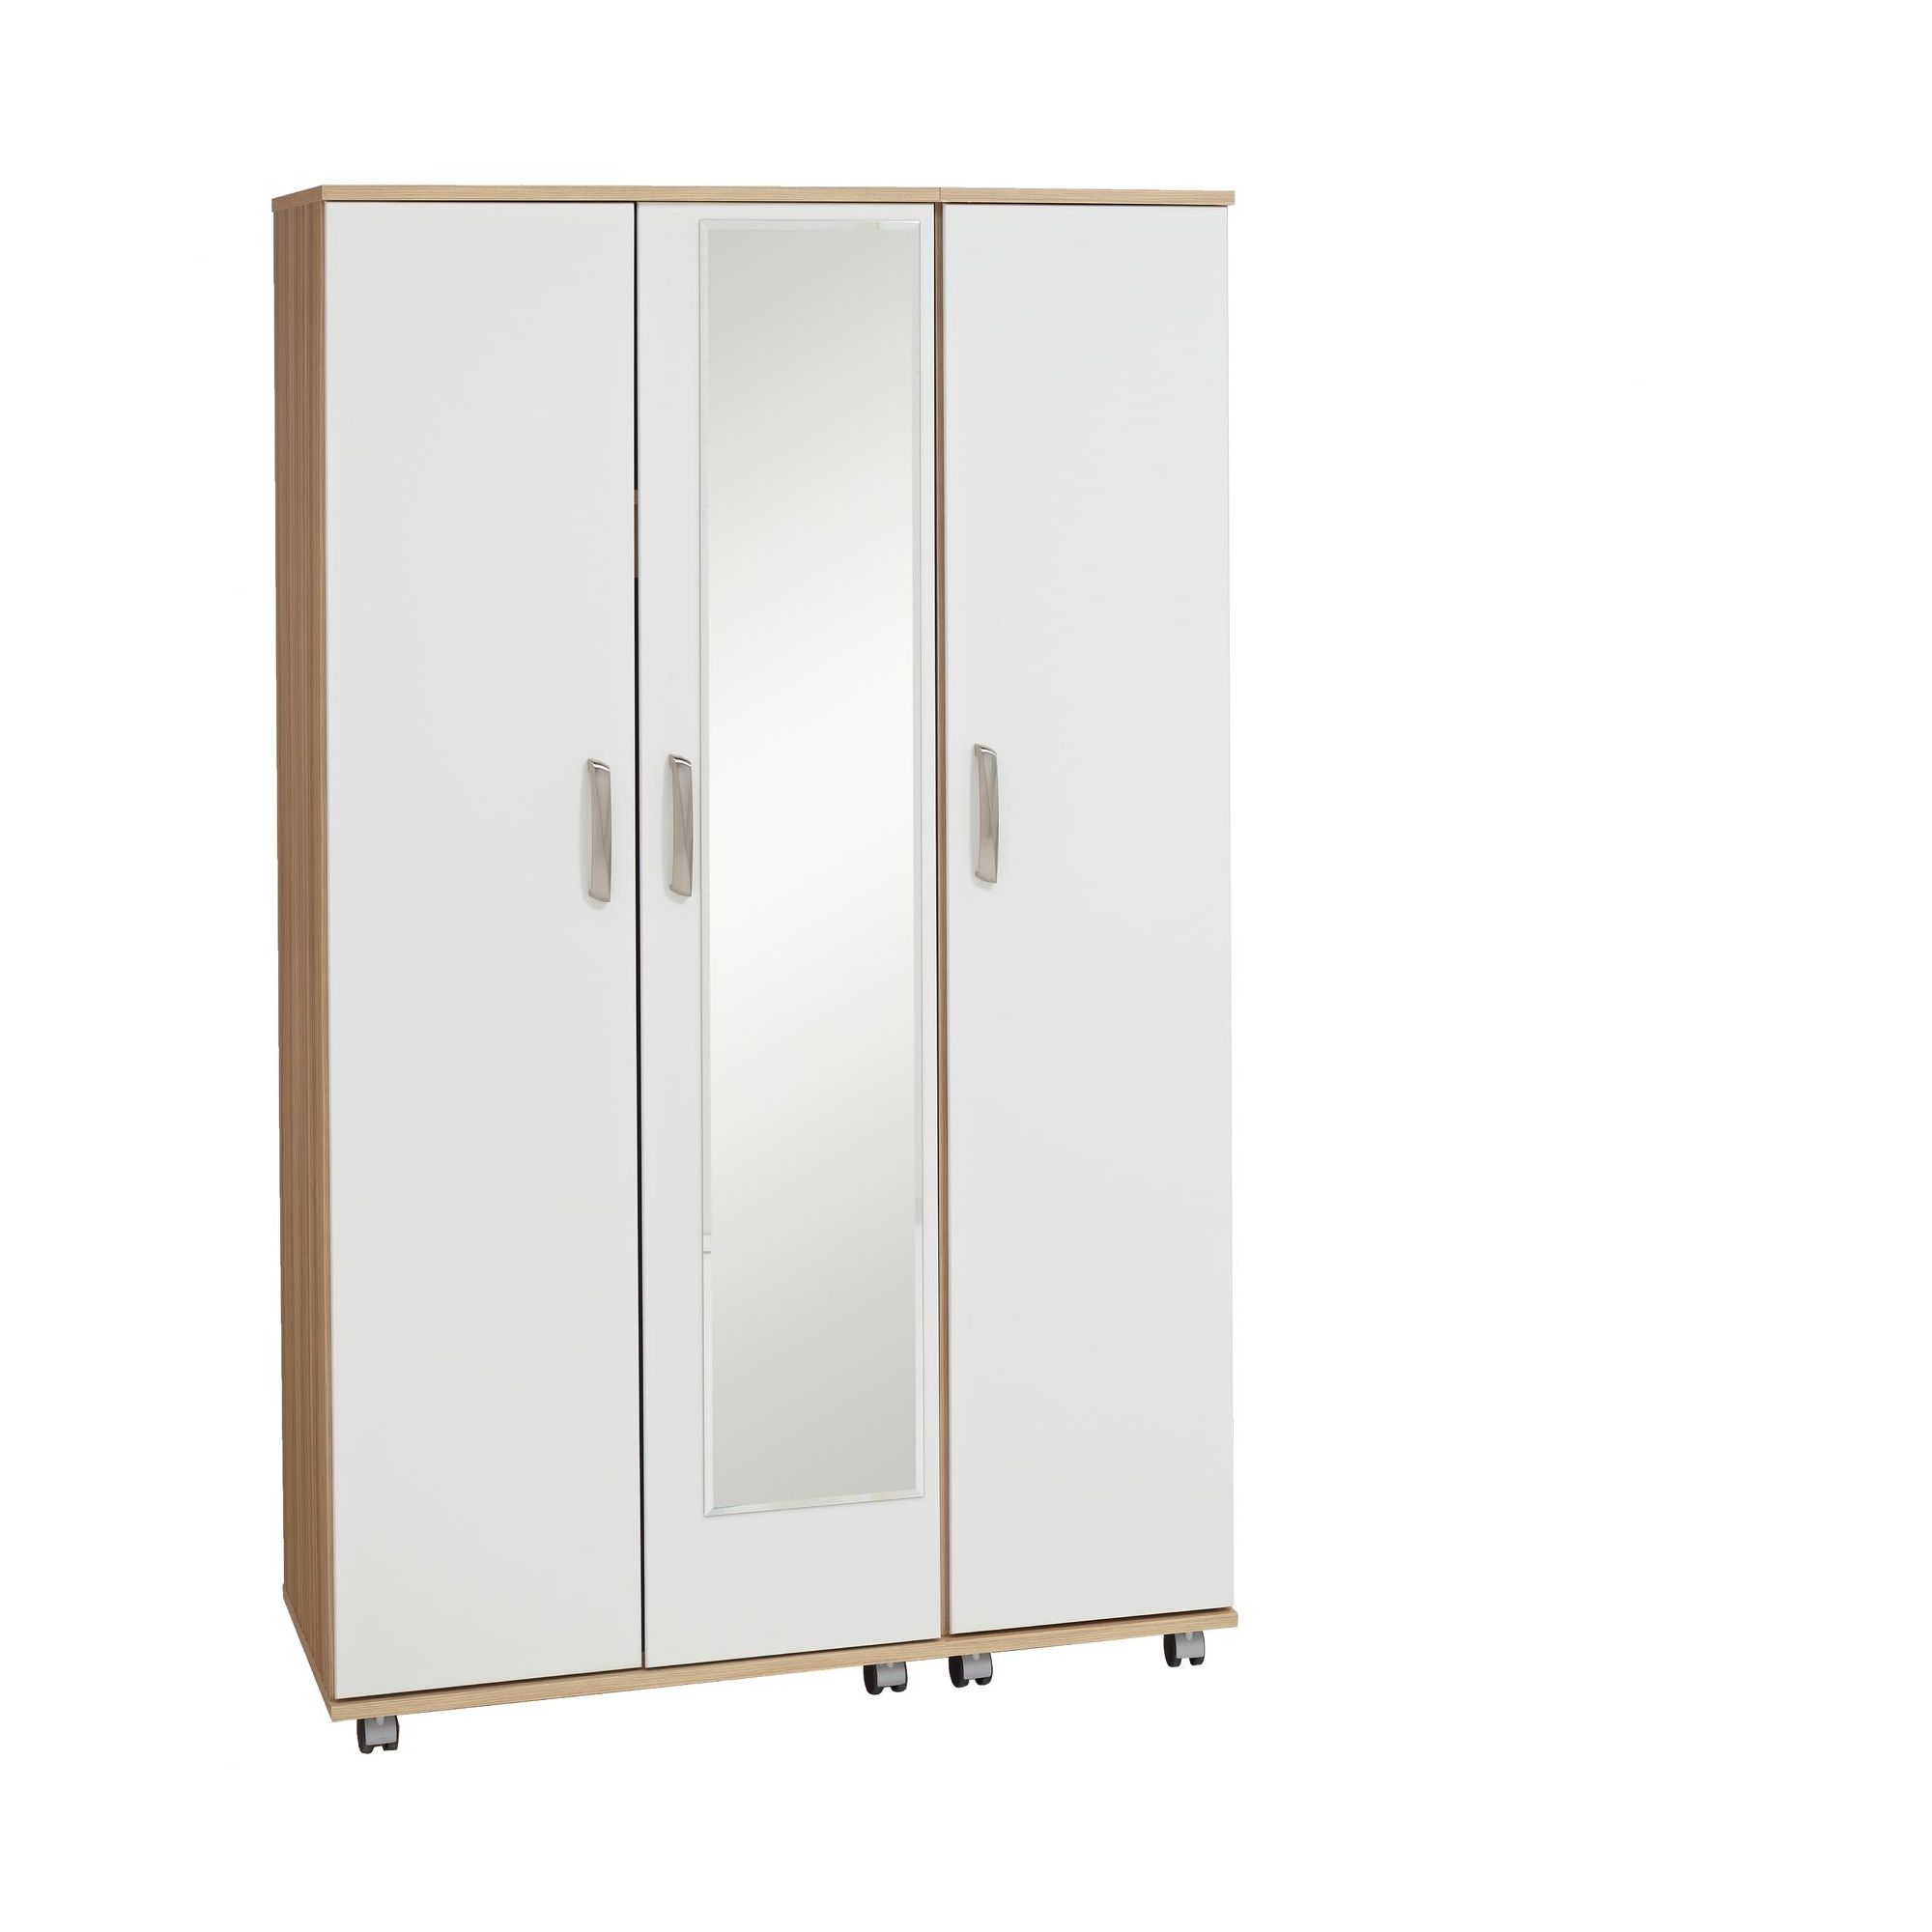 Ideal Furniture Regal Wardrobe Mirror in white at Tesco Direct